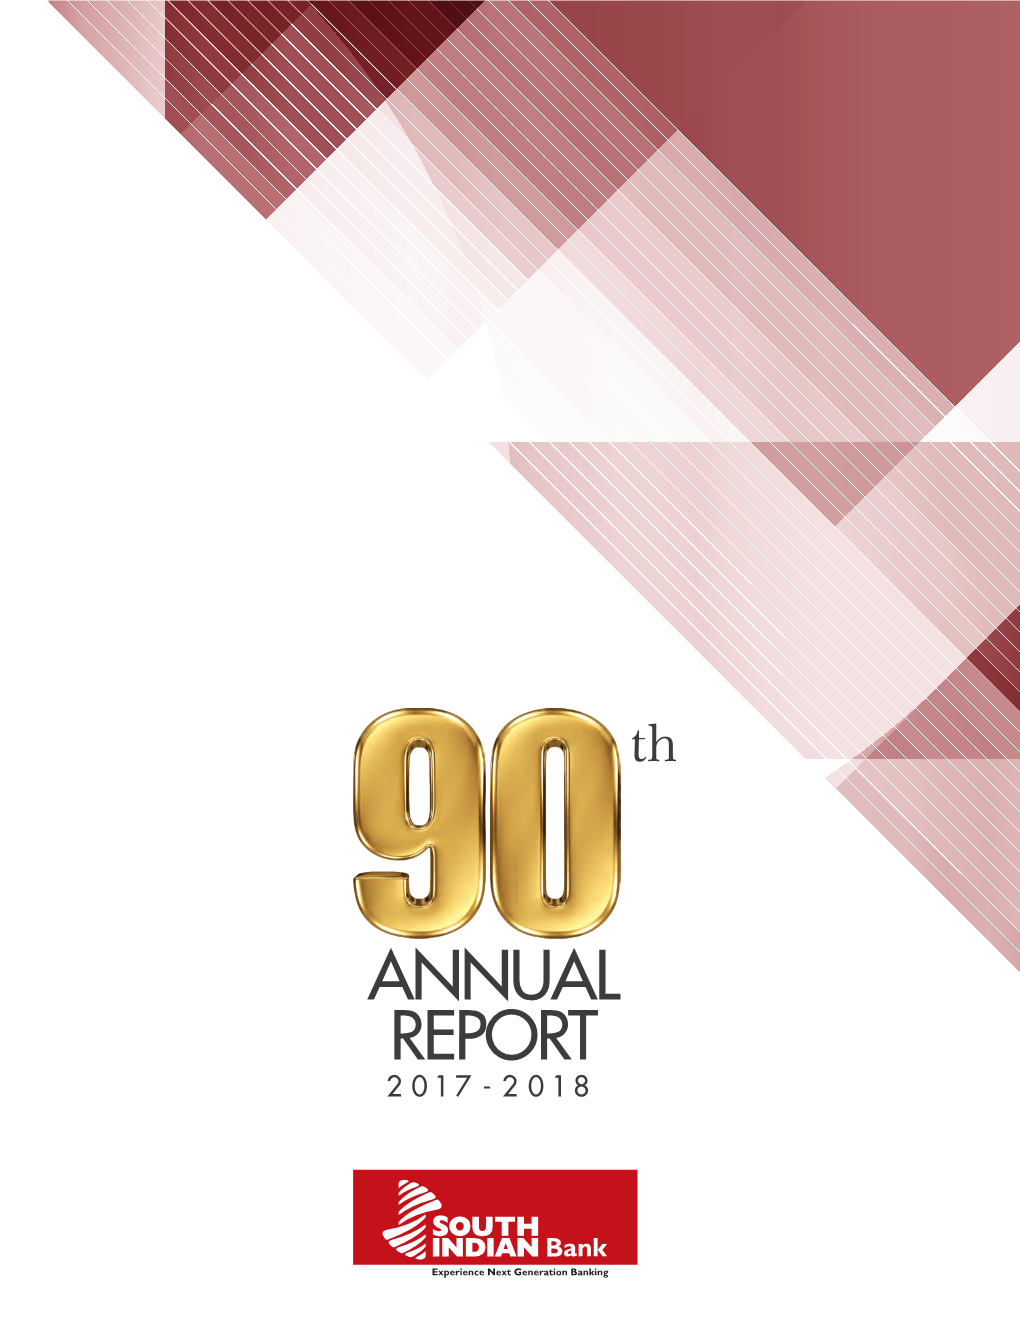 Annual Report 2 0 1 7 - 2 0 1 8